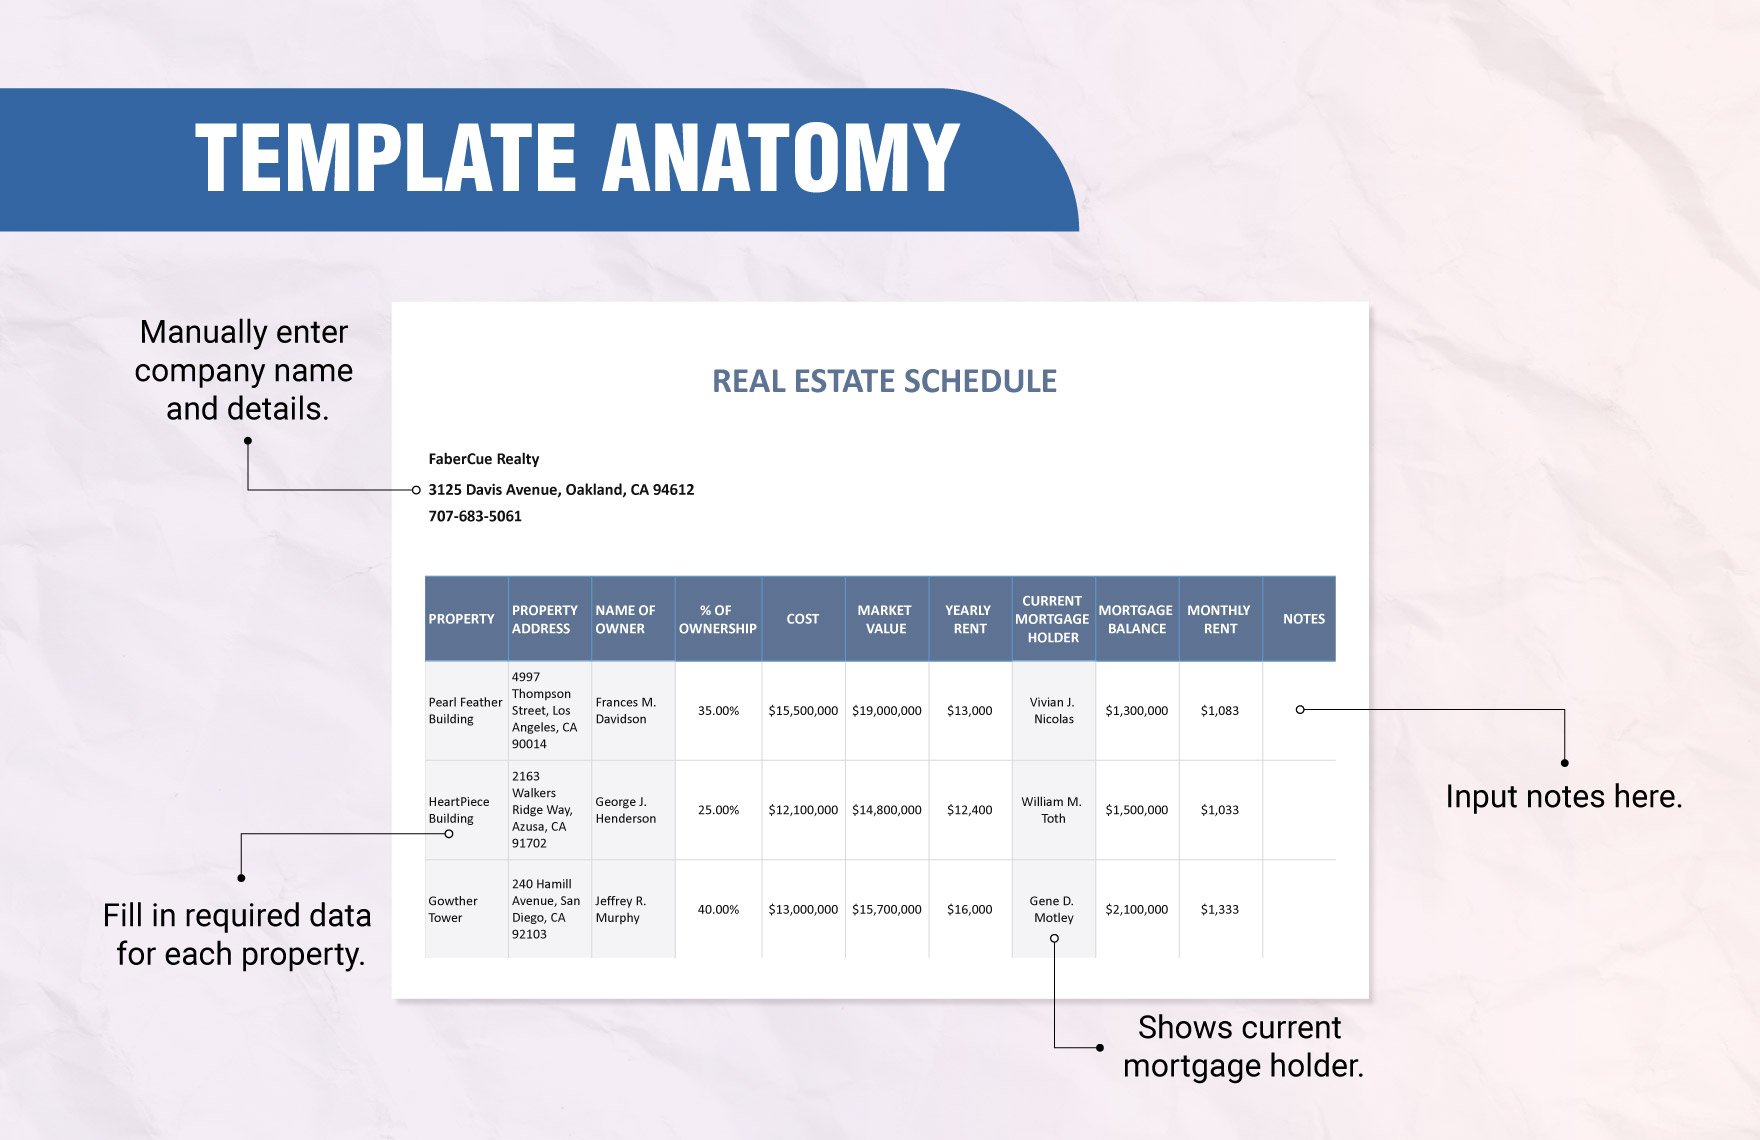 Sample Real Estate Schedule Template